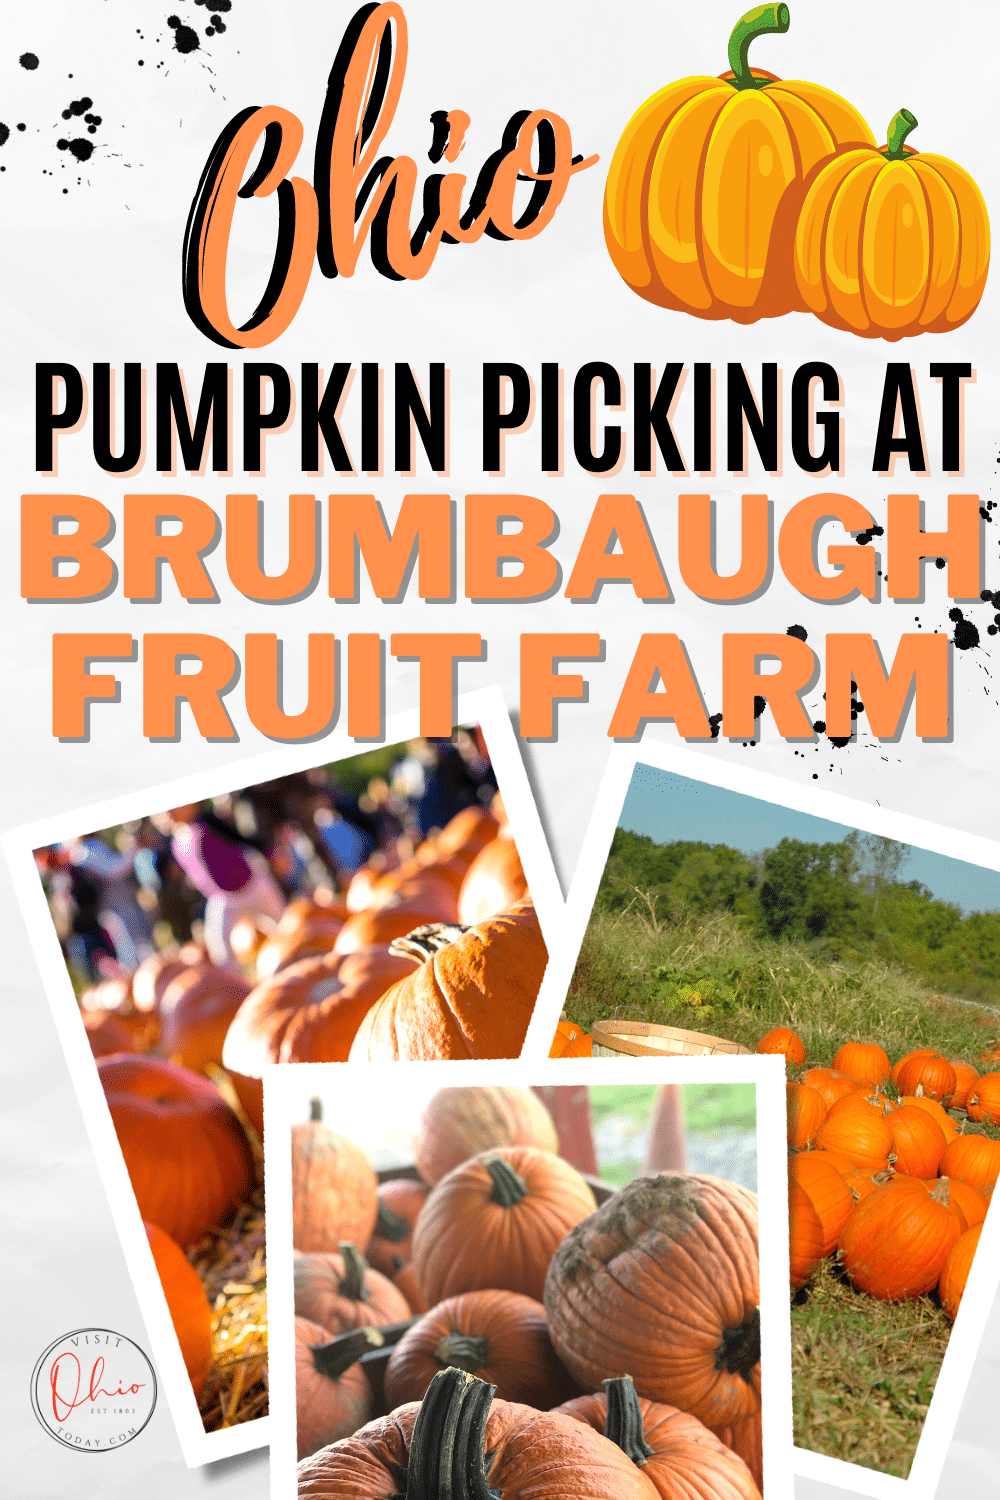 Brumbaugh Fruit Farm is located in Arcanum, Ohio. At Brumbaugh Fruit Farm you can find lots of fun Fall activities and Fall themed food. #ohio #apples #pumpkins #fallfestival #fruitfarm